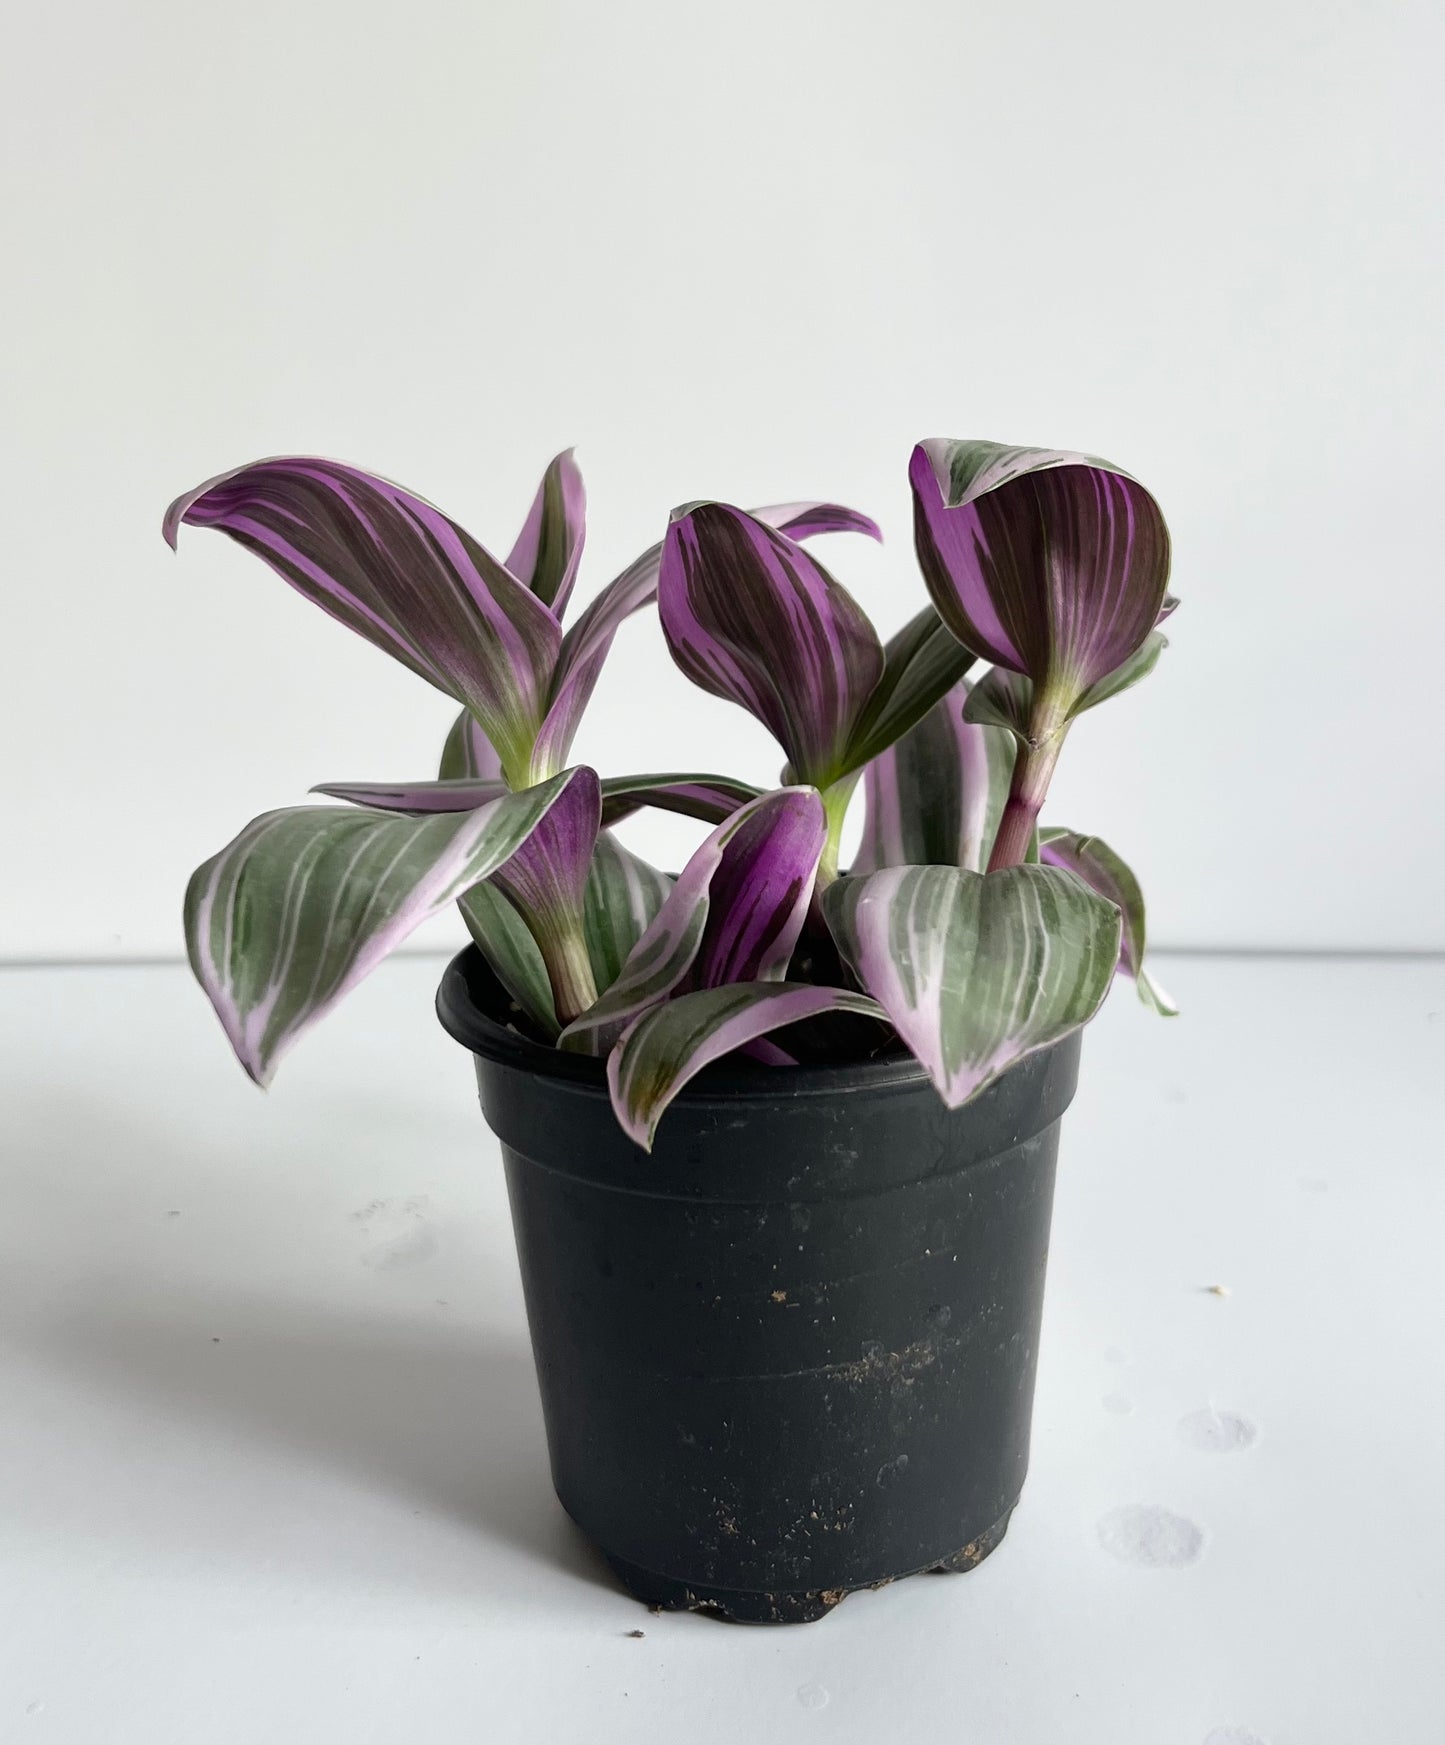 Tradescantia Albiflora 'Nanouk' Plant- Colorful, Low Maintenance, Trailing Tropical Houseplant- (4" or 6" Nursery Pot)